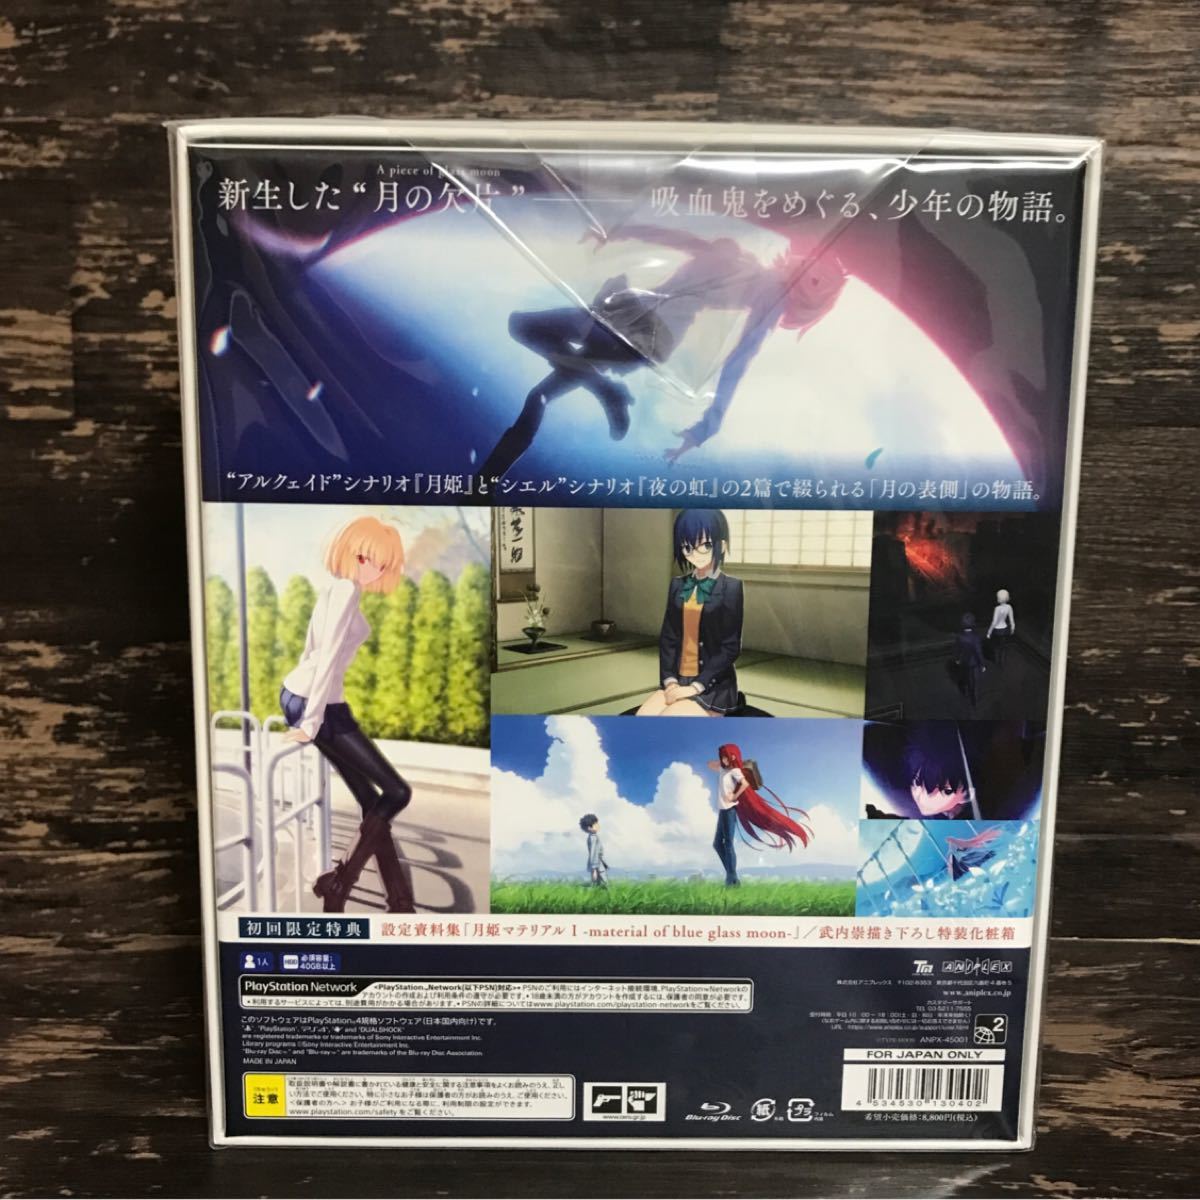 【PS4】 月姫 -A piece of blue glass moon- [初回限定版]